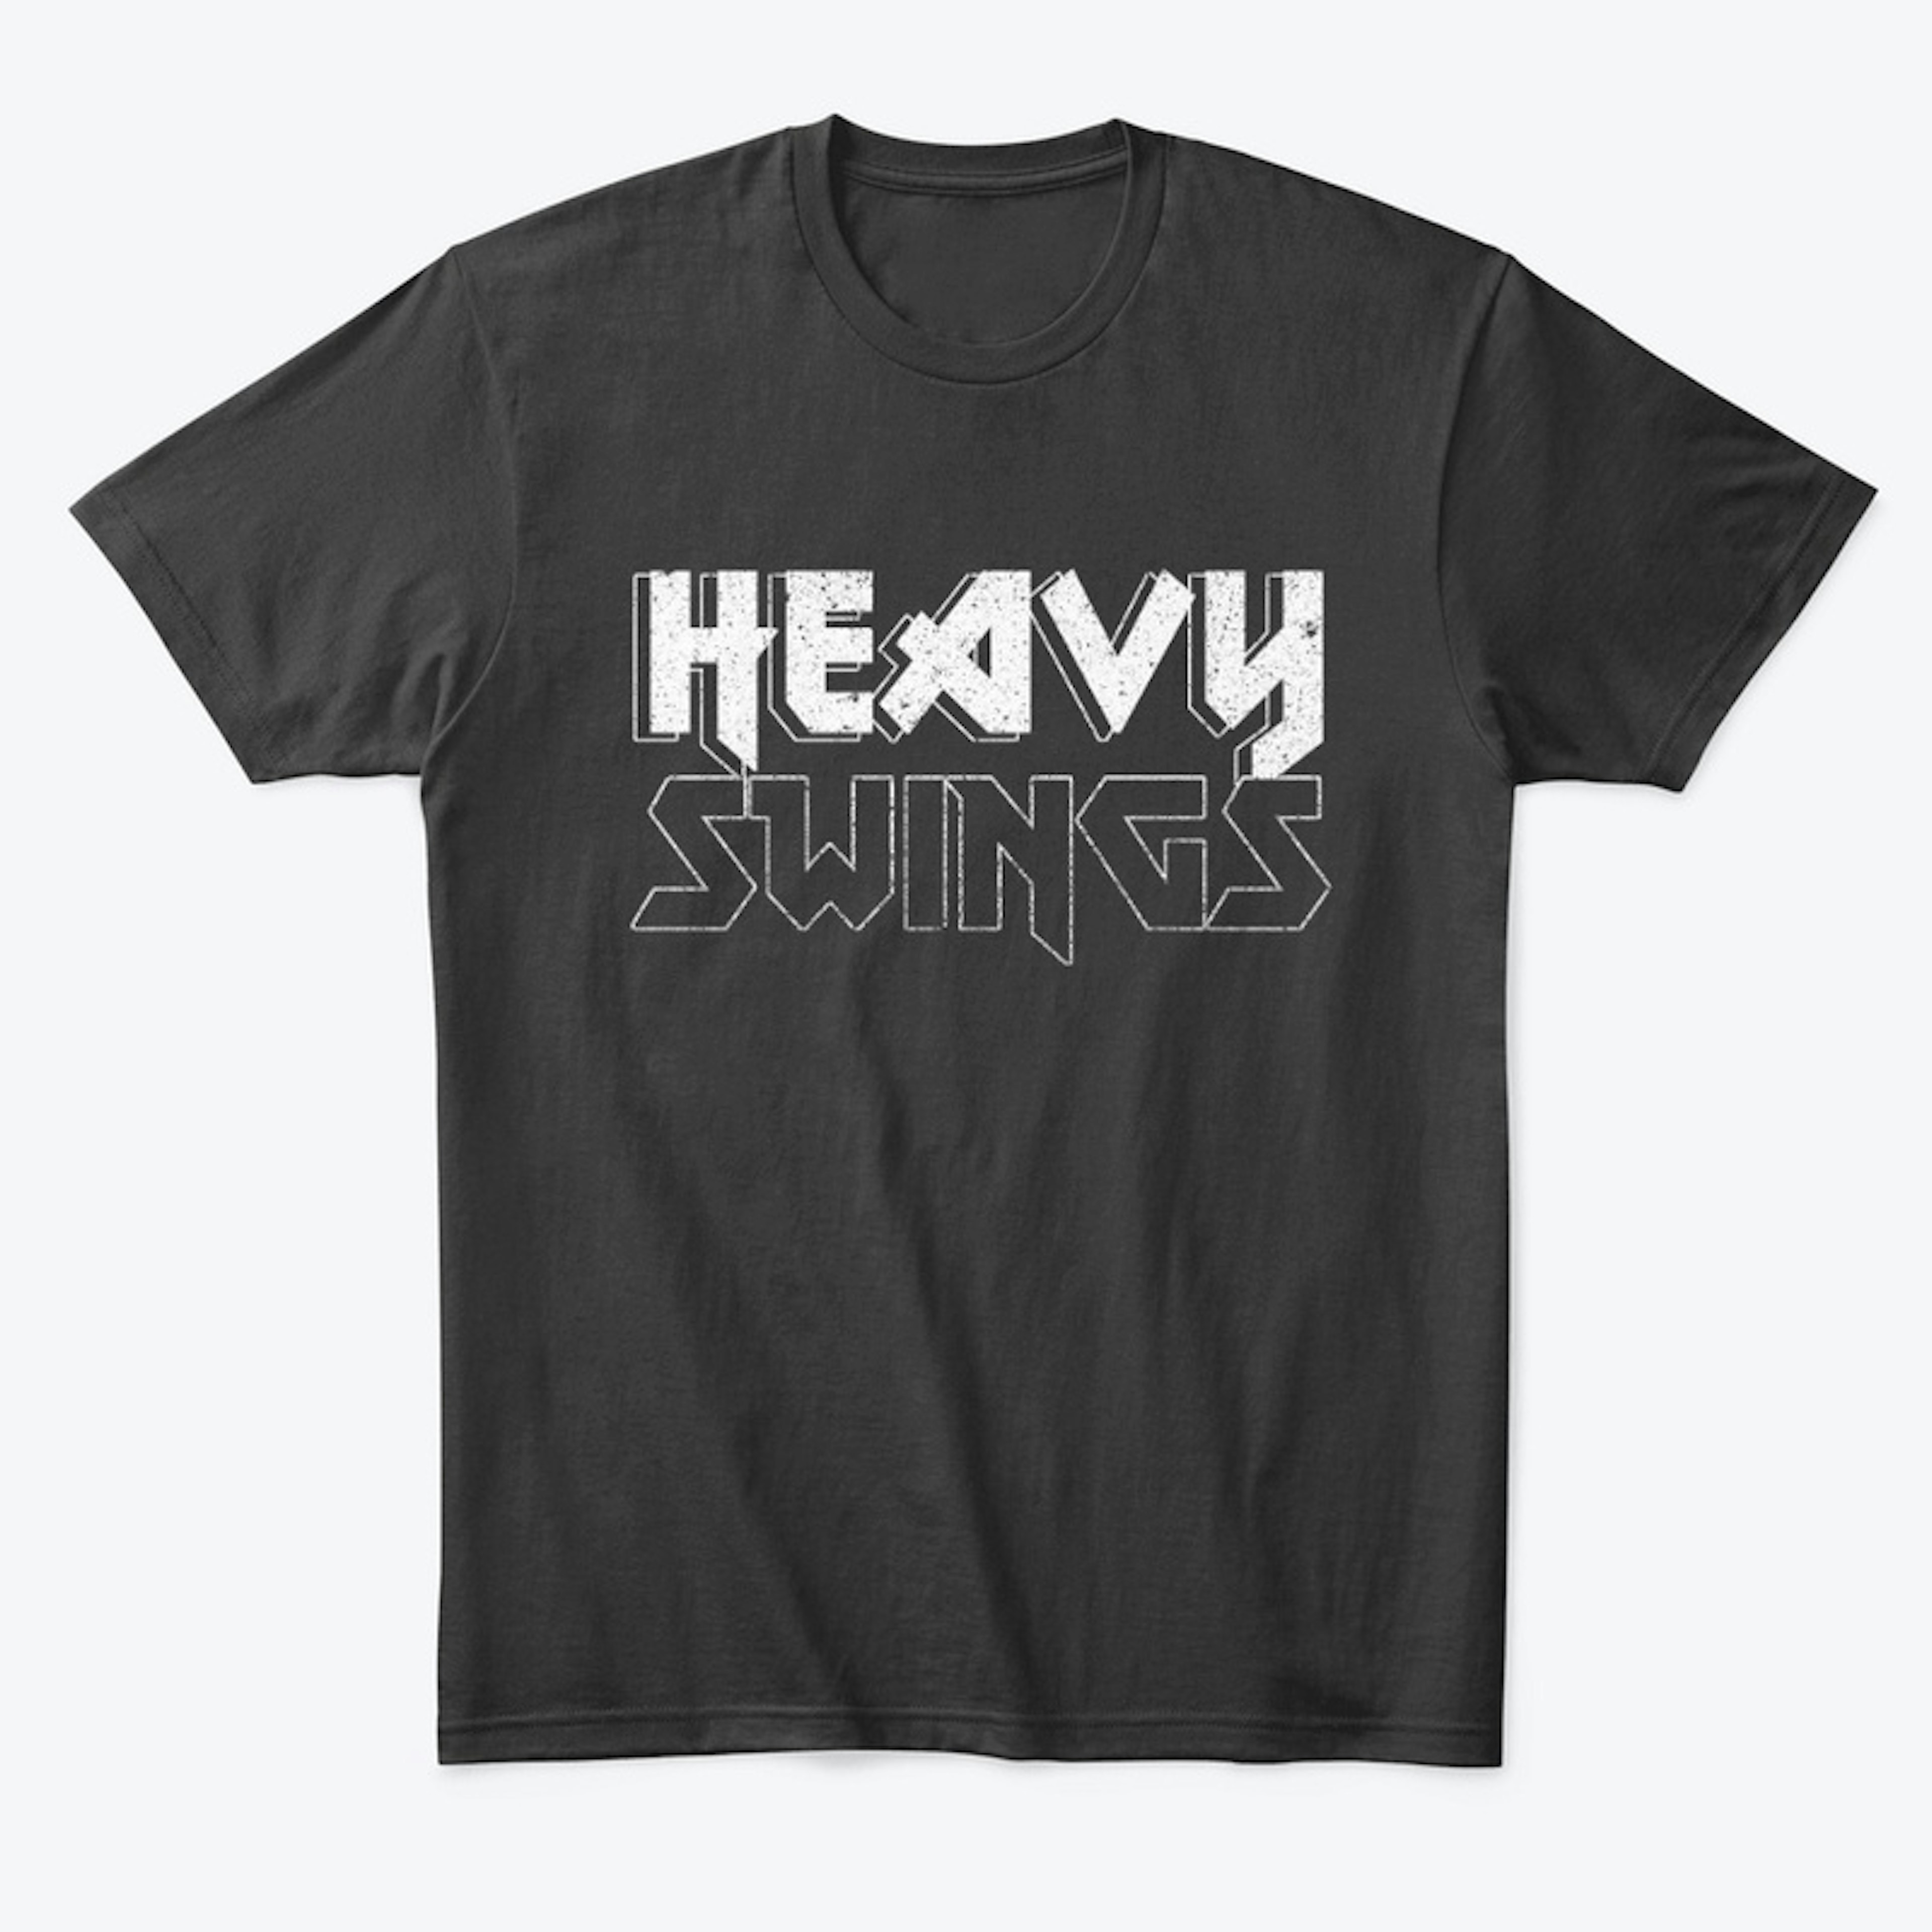 Heavy Metal Swings (Up to 5XL)